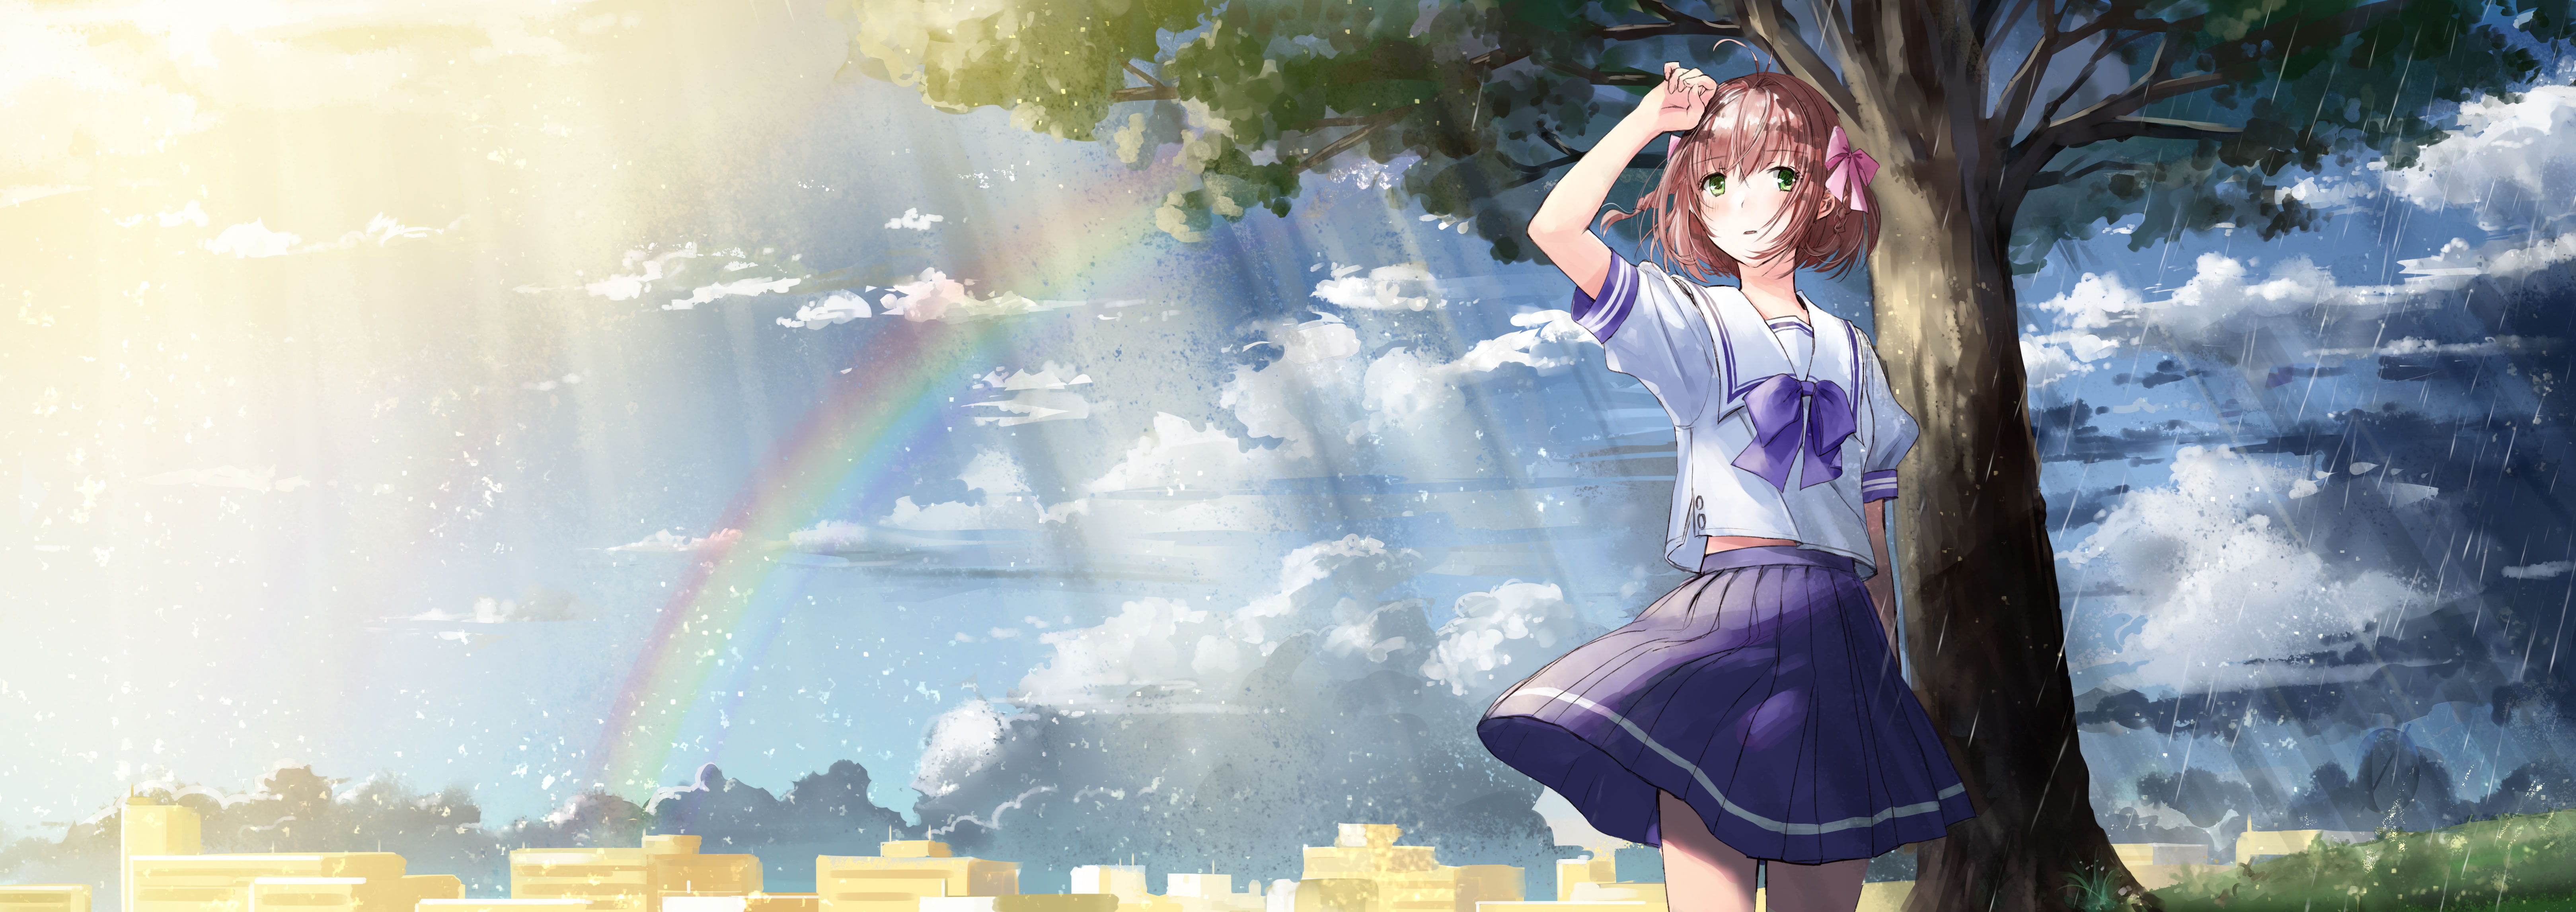 Anime 6474x2293 rainbows landscape anime girls anime miniskirt trees outdoors school uniform Rumbling Hearts rain